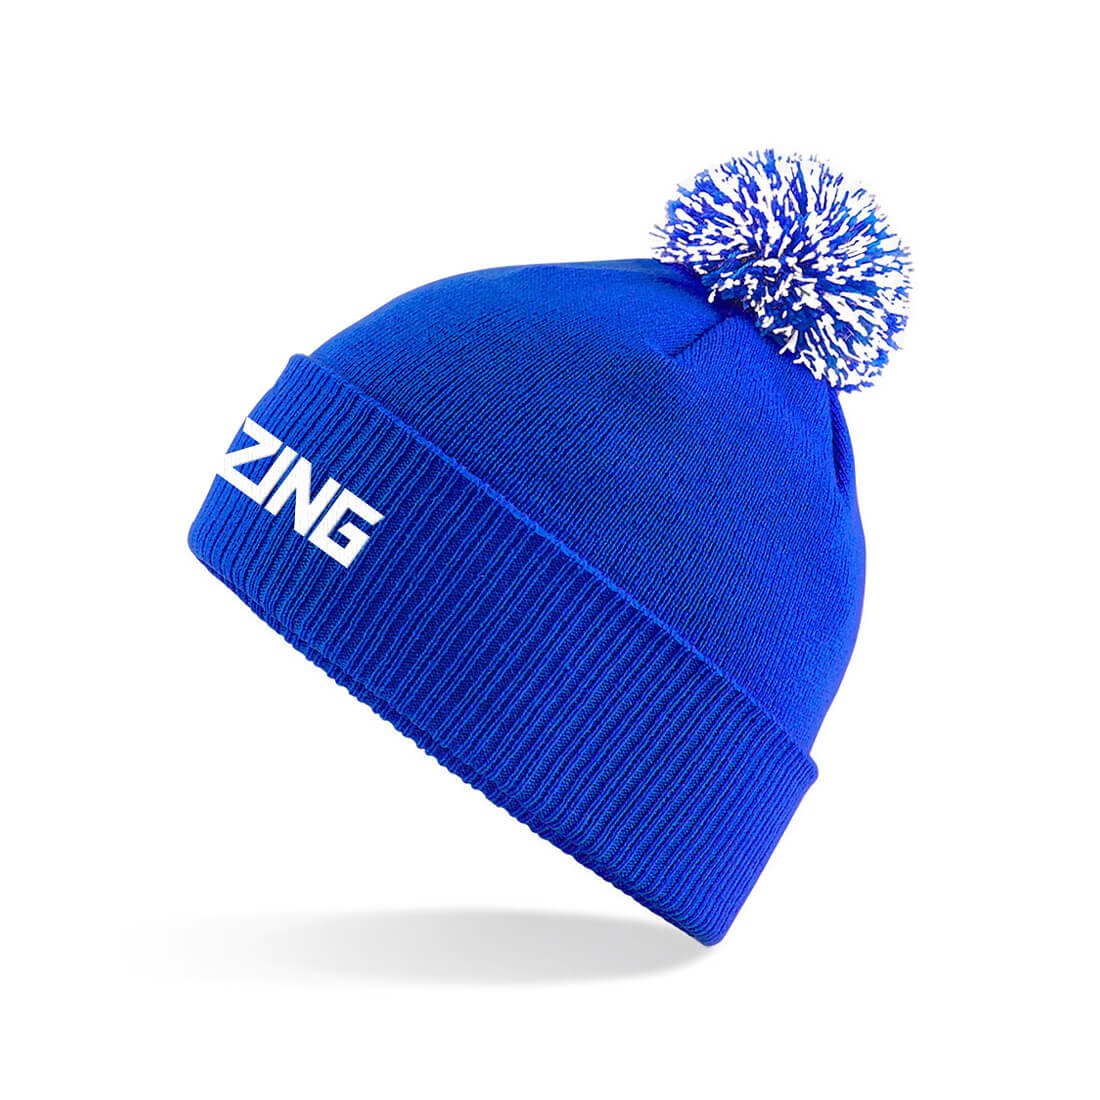 ZING Sportswear Bobble Hat | Training Kit and Teamwear – ZING - Royal Blue